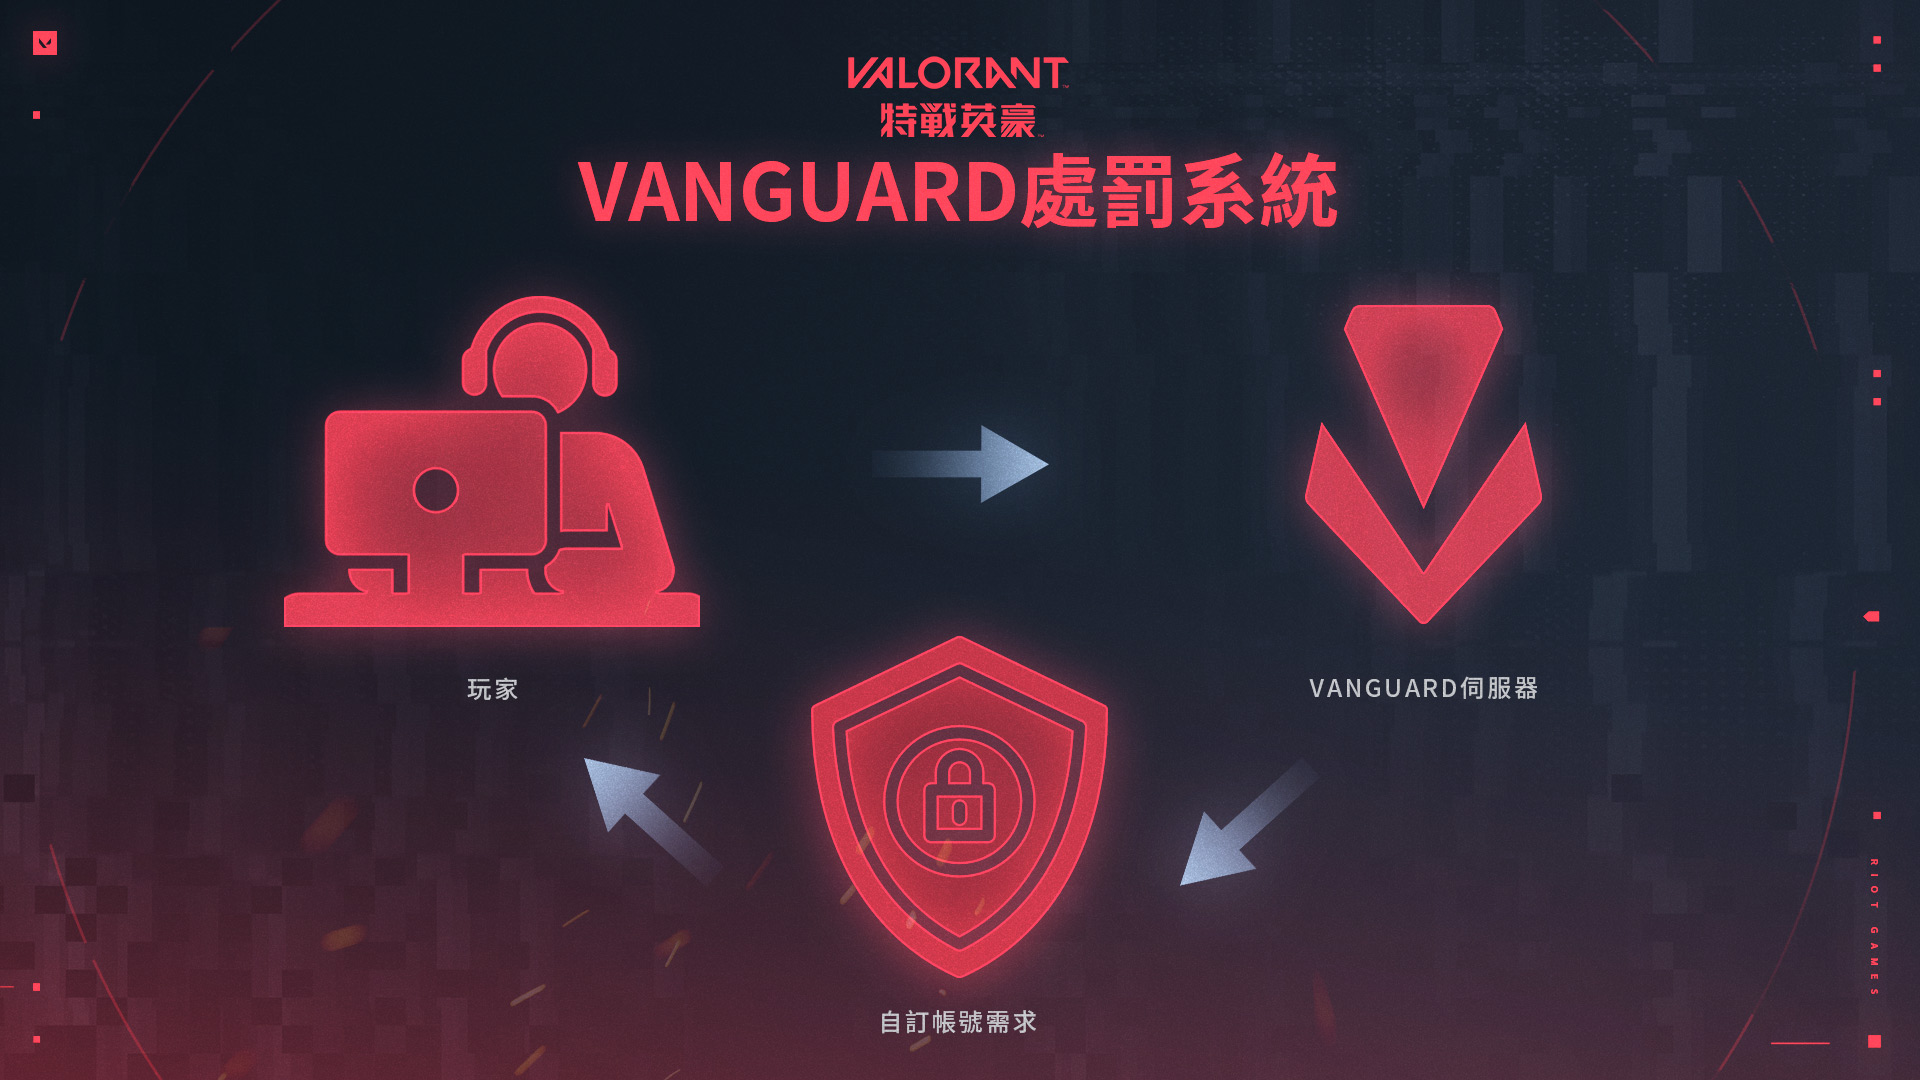 Val_Vanguard_Restriction_System_TW.jpg